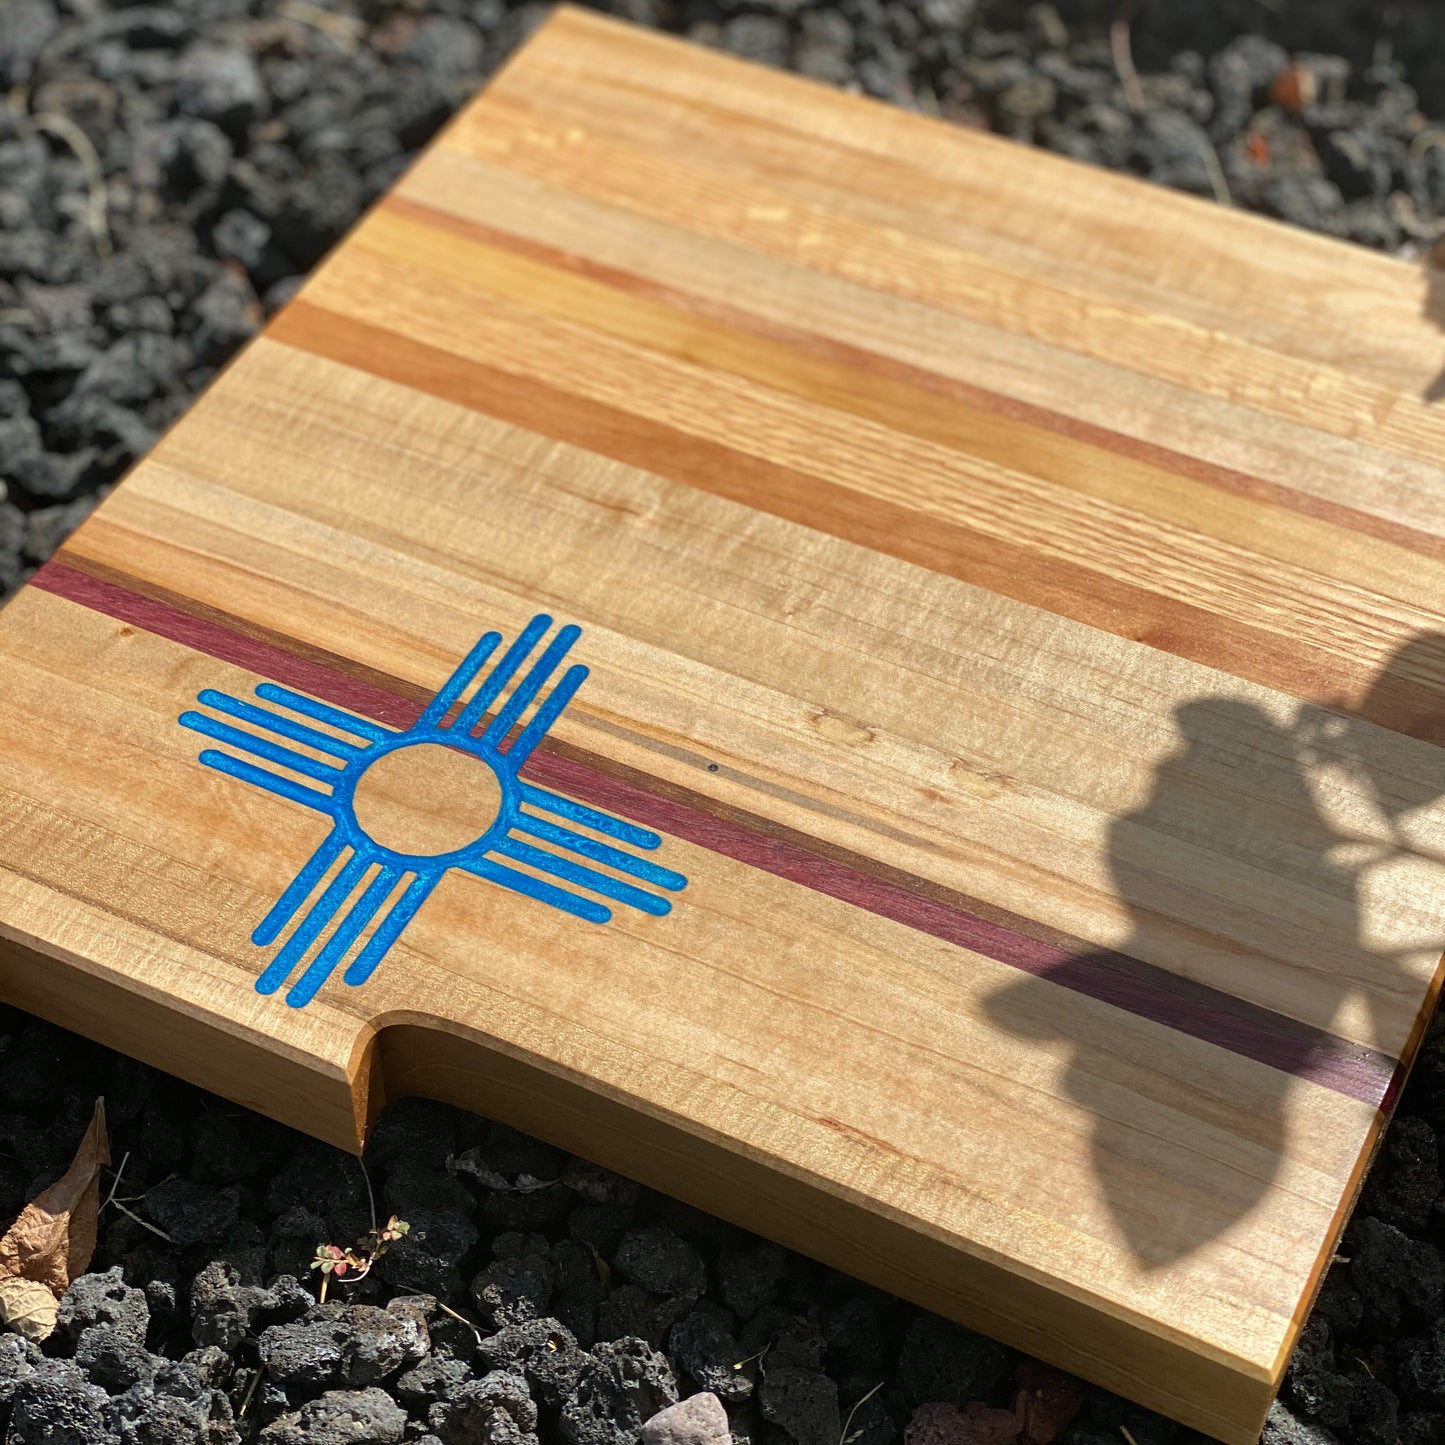 New Mexico Cutting Board